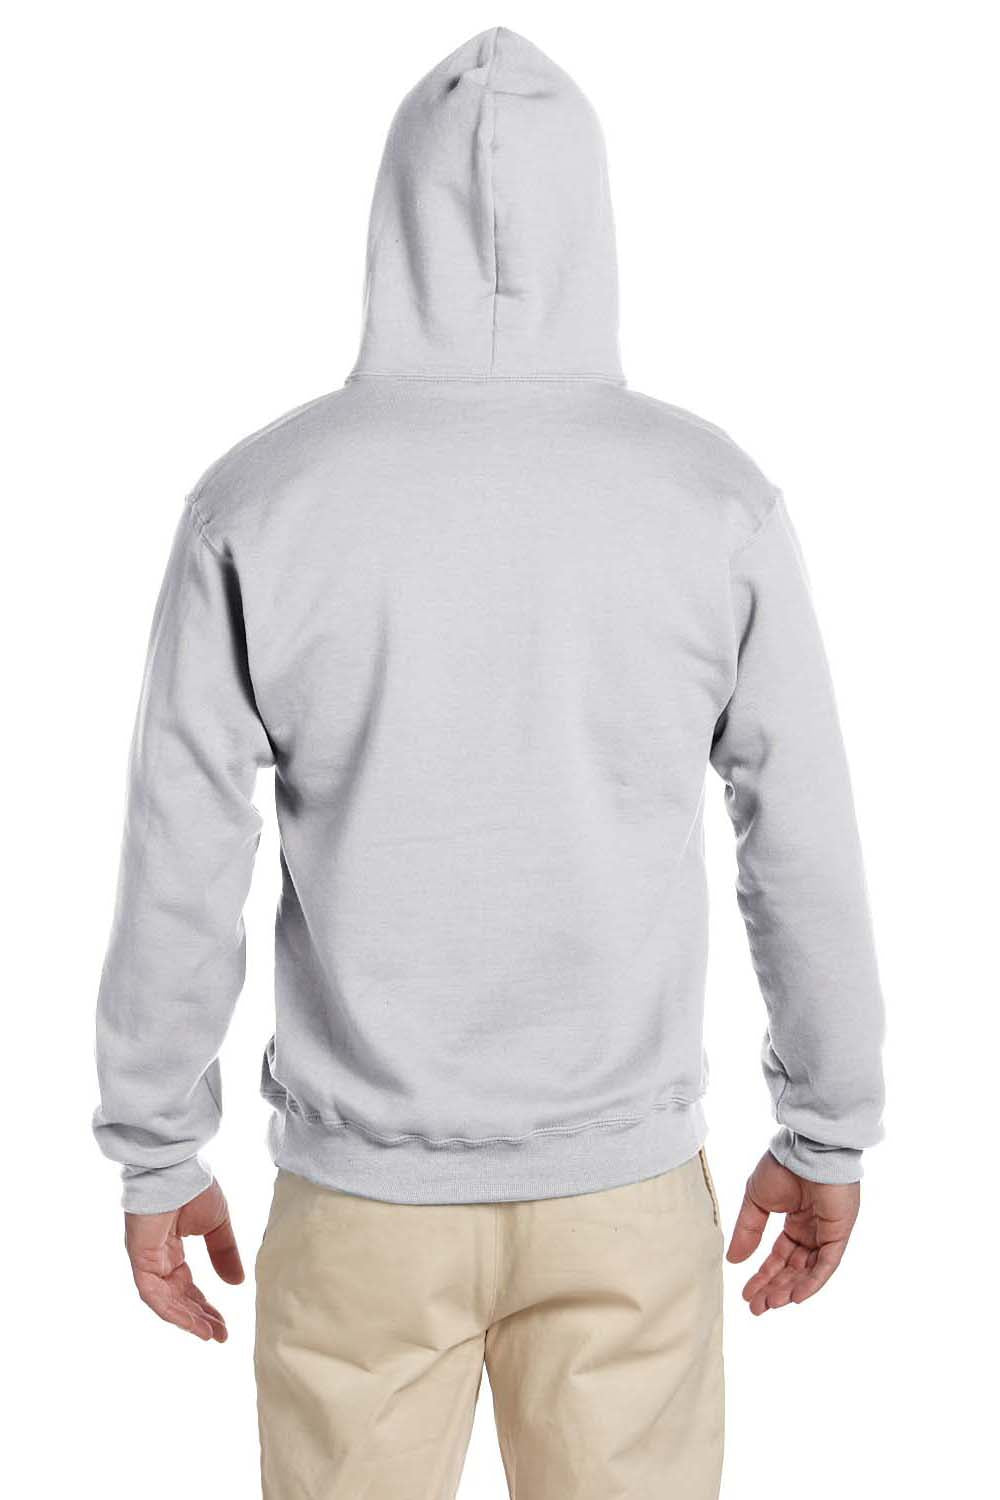 Jerzees 4997 Mens Super Sweats NuBlend Fleece Hooded Sweatshirt Hoodie Ash Grey Back